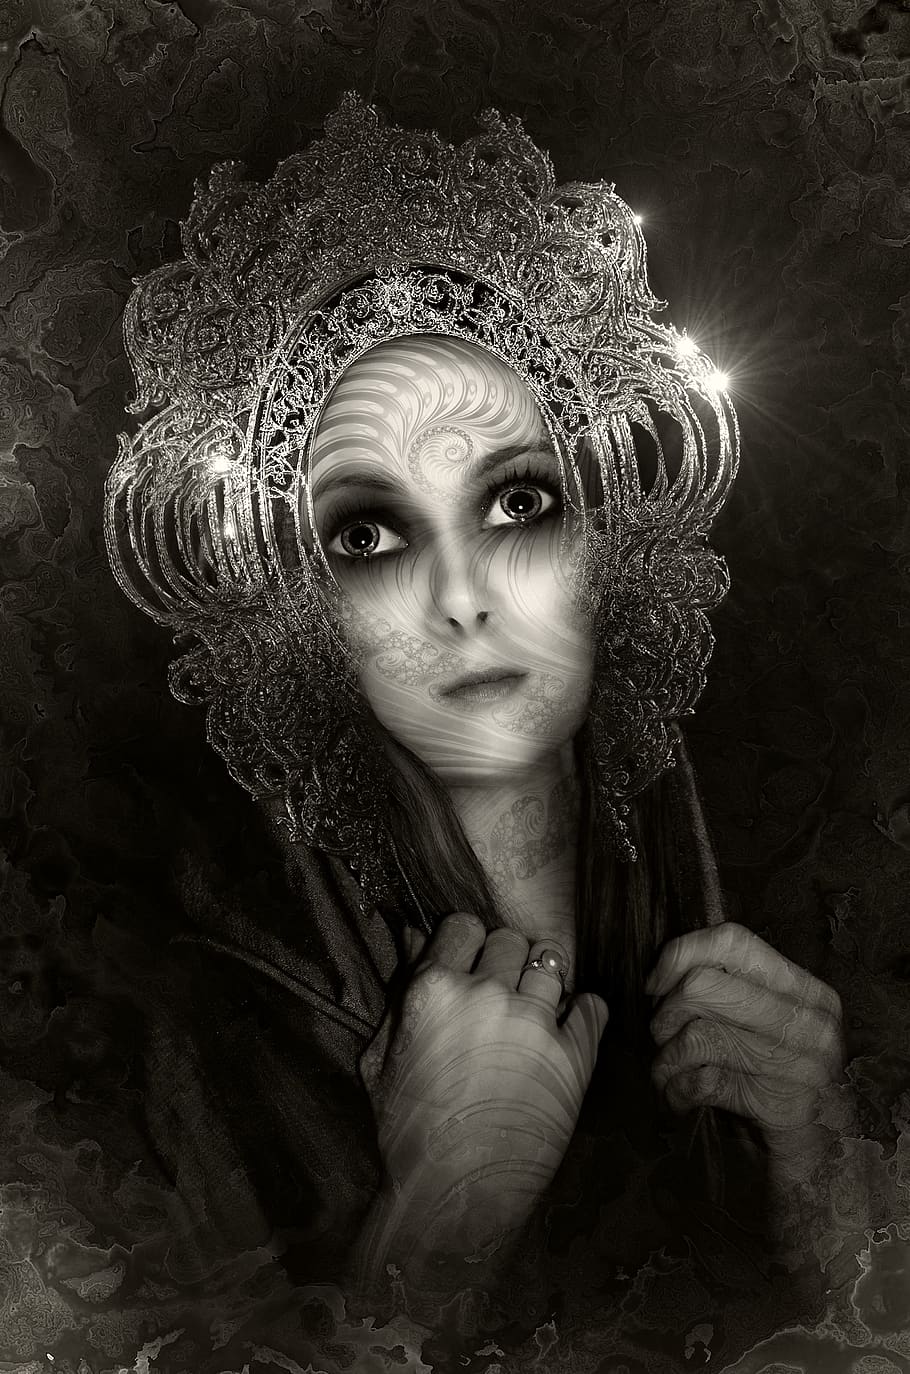 Hd Wallpaper Book Cover Portrait Woman Face Gothic Magic Images, Photos, Reviews